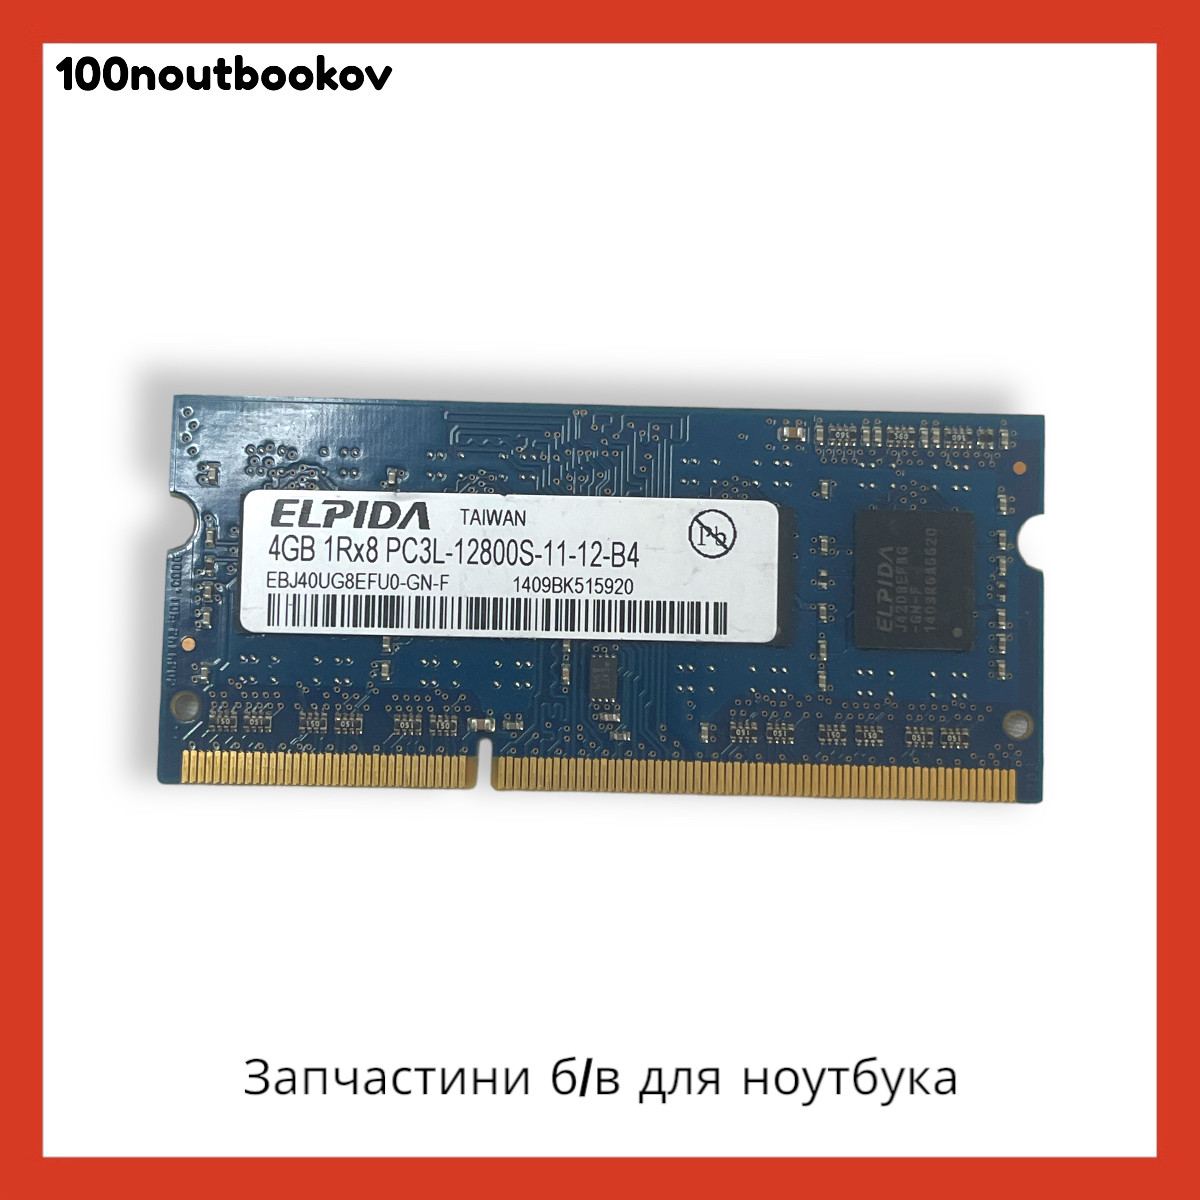 Оперативна пам'ять DDR3 SoDIMM | ELPIDA 4096MB (4GB) PC3L 12800S 1600MHz EBJ40UG8EFU0-GN-F + ГАРАНТІЯ